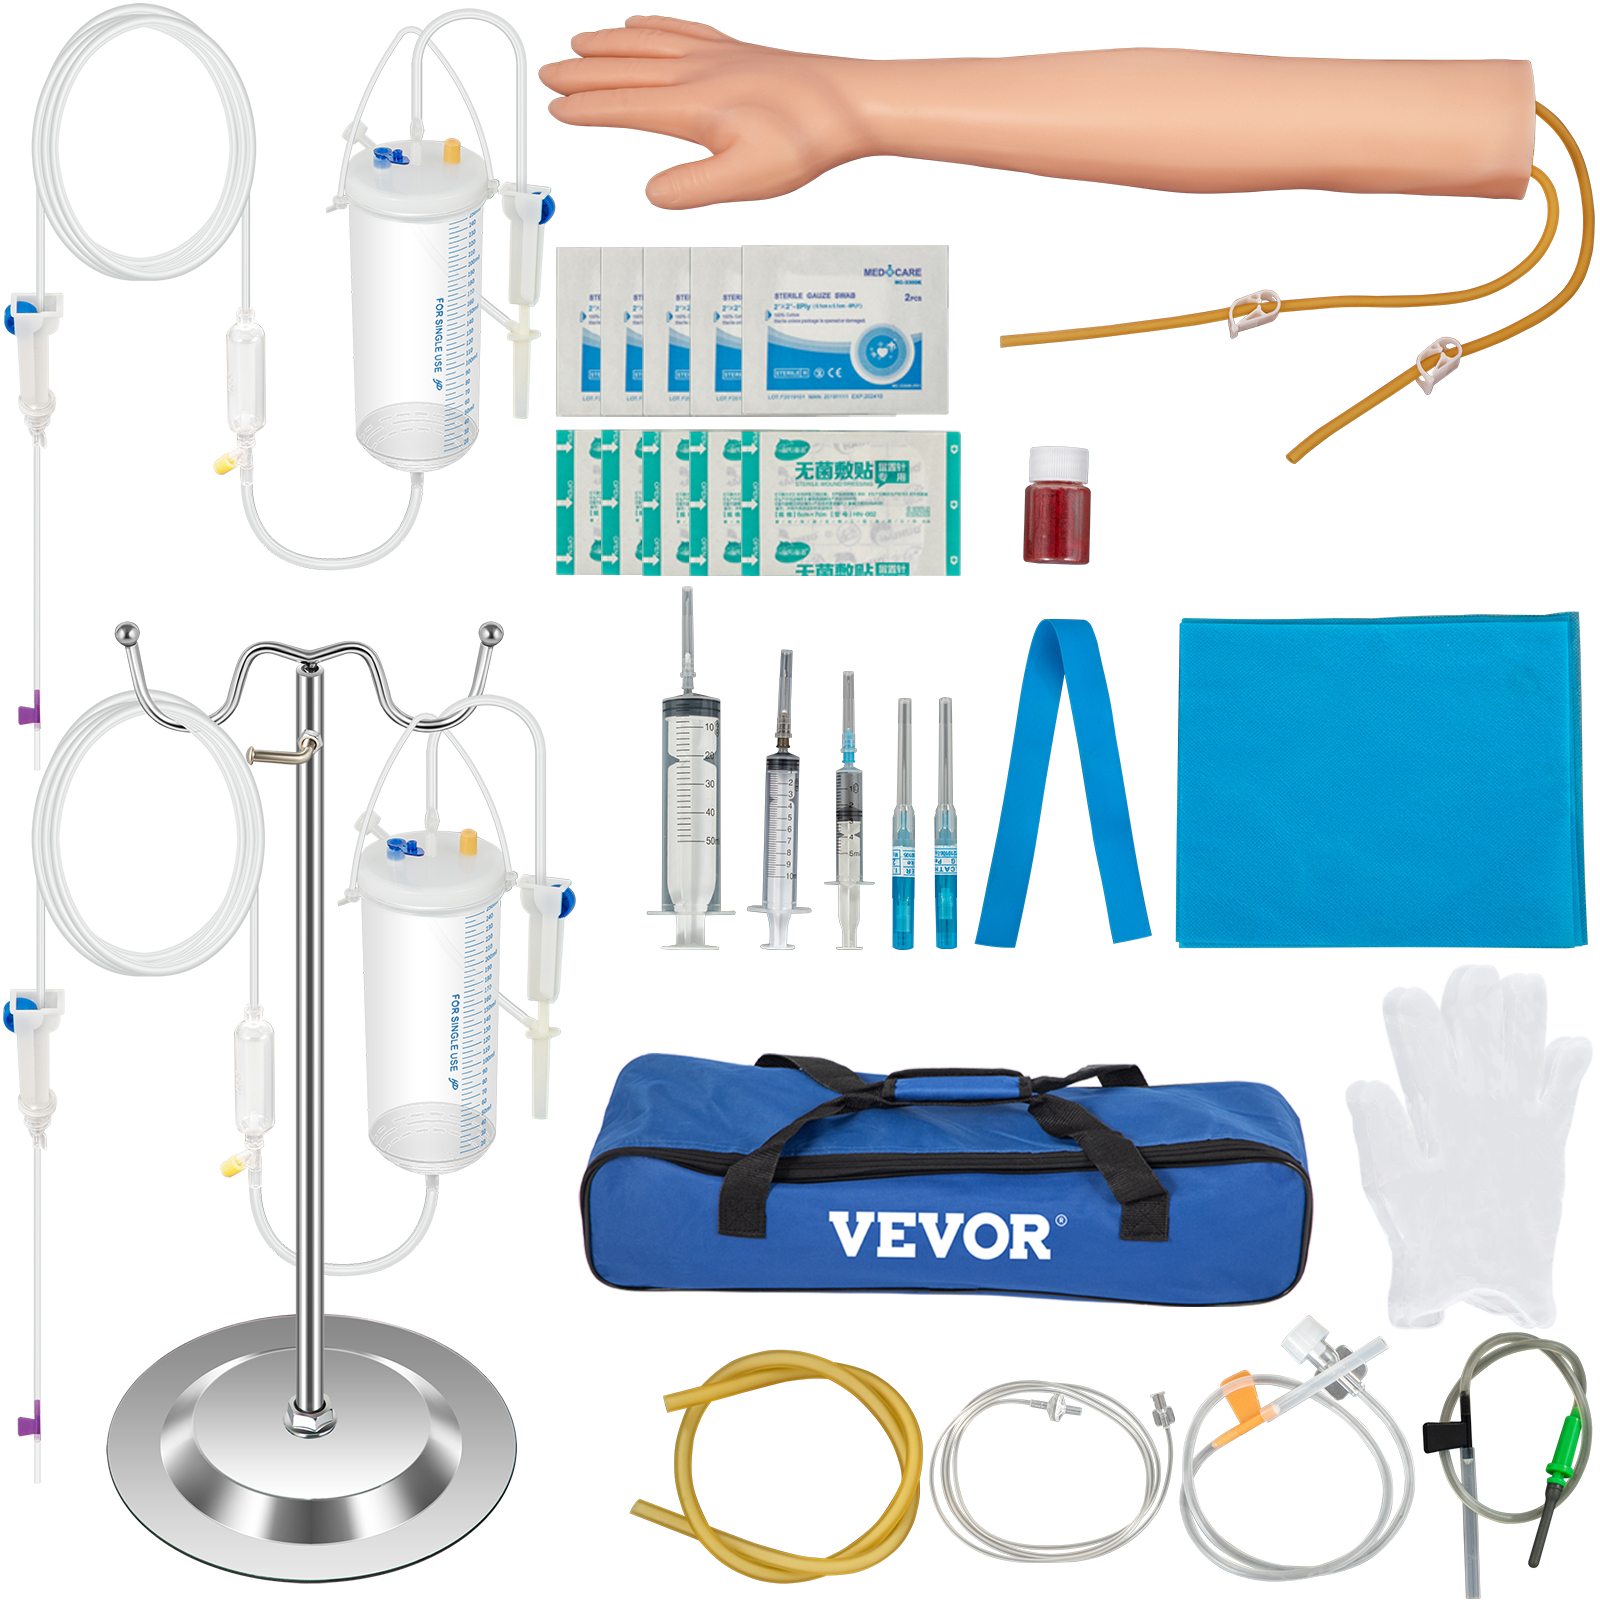 Vevor Intravenous Practice Arm Kit Phlebotomy Arm 25 Pieces Pvc For Venipuncture от Vevor Many GEOs